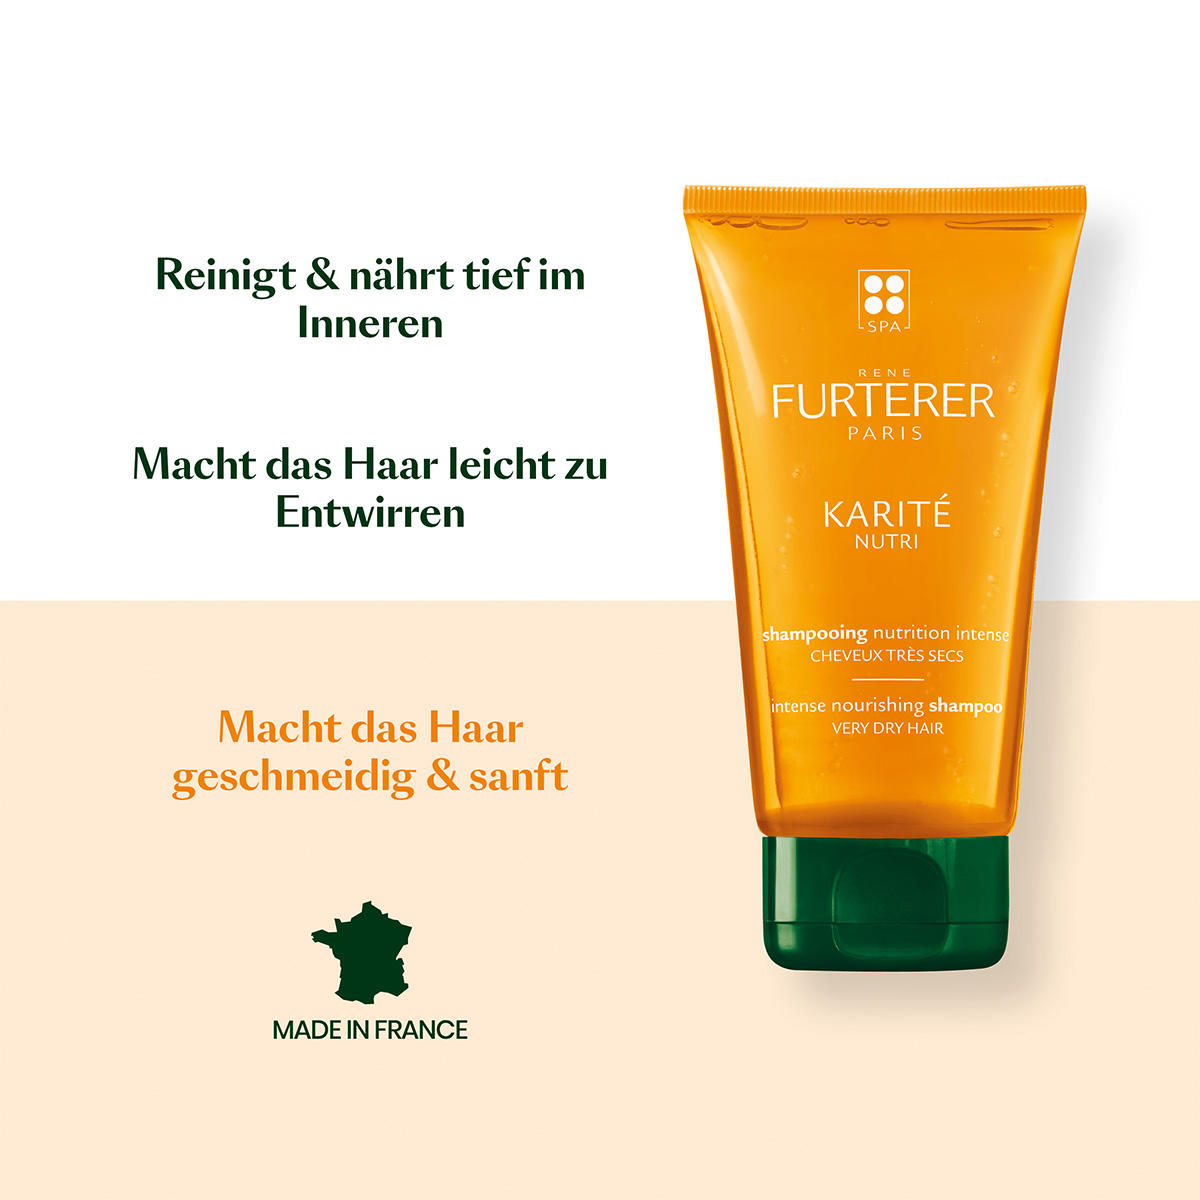 René Furterer Karité Nutri Intensive nourishing shampoo 150 ml - 7